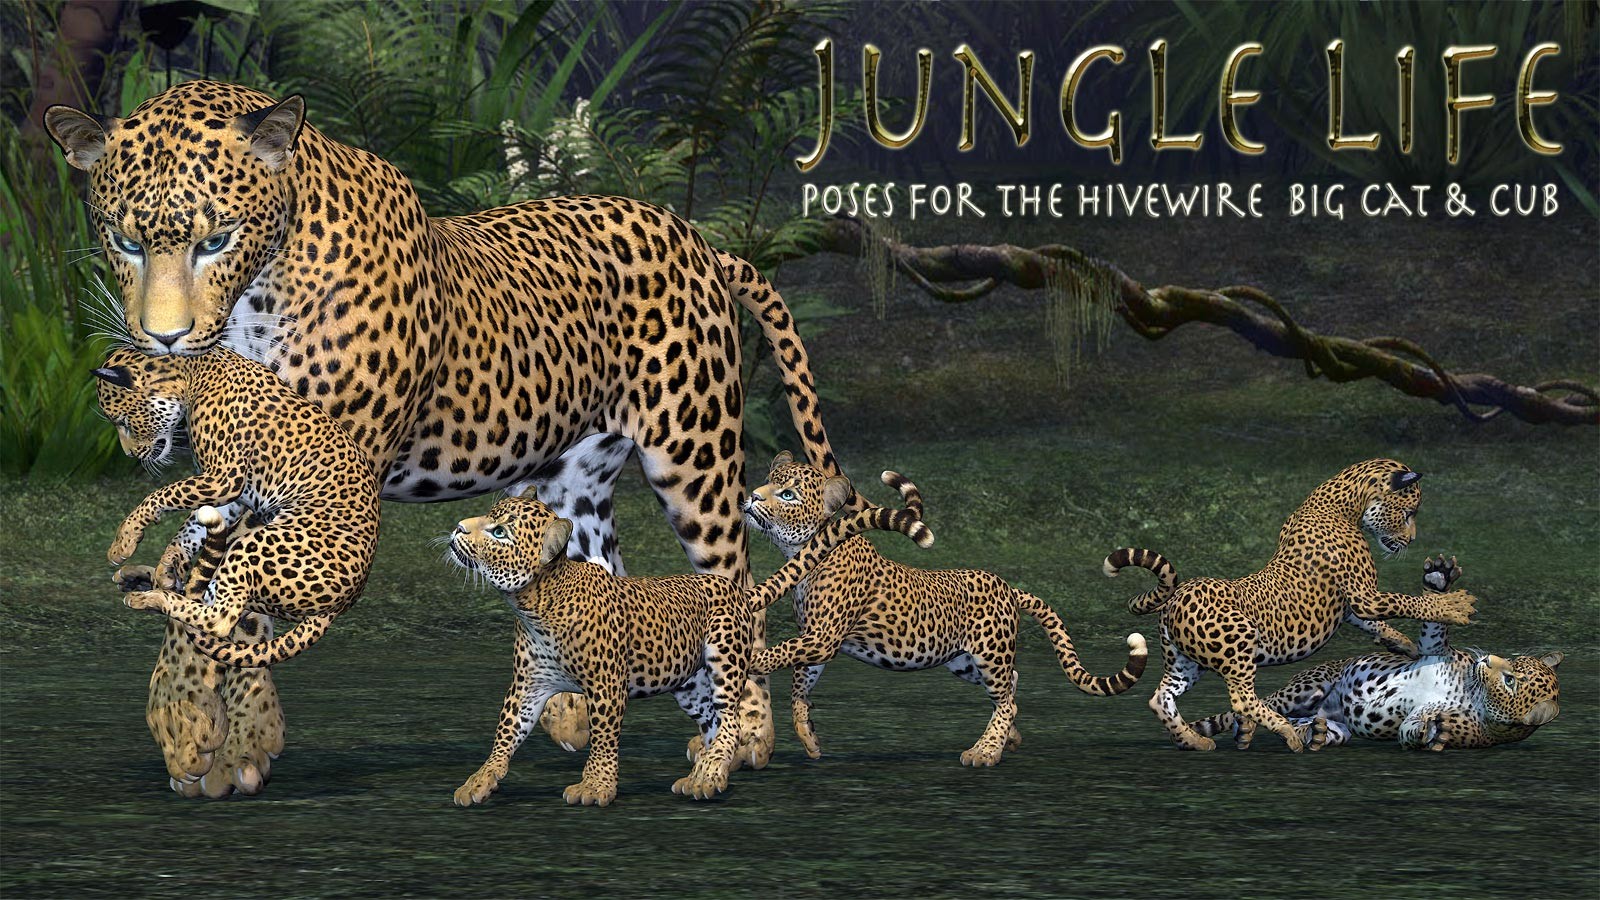 11416-jungle-life-poses-for-the-hw-big-cat-and-cub-main.jpg